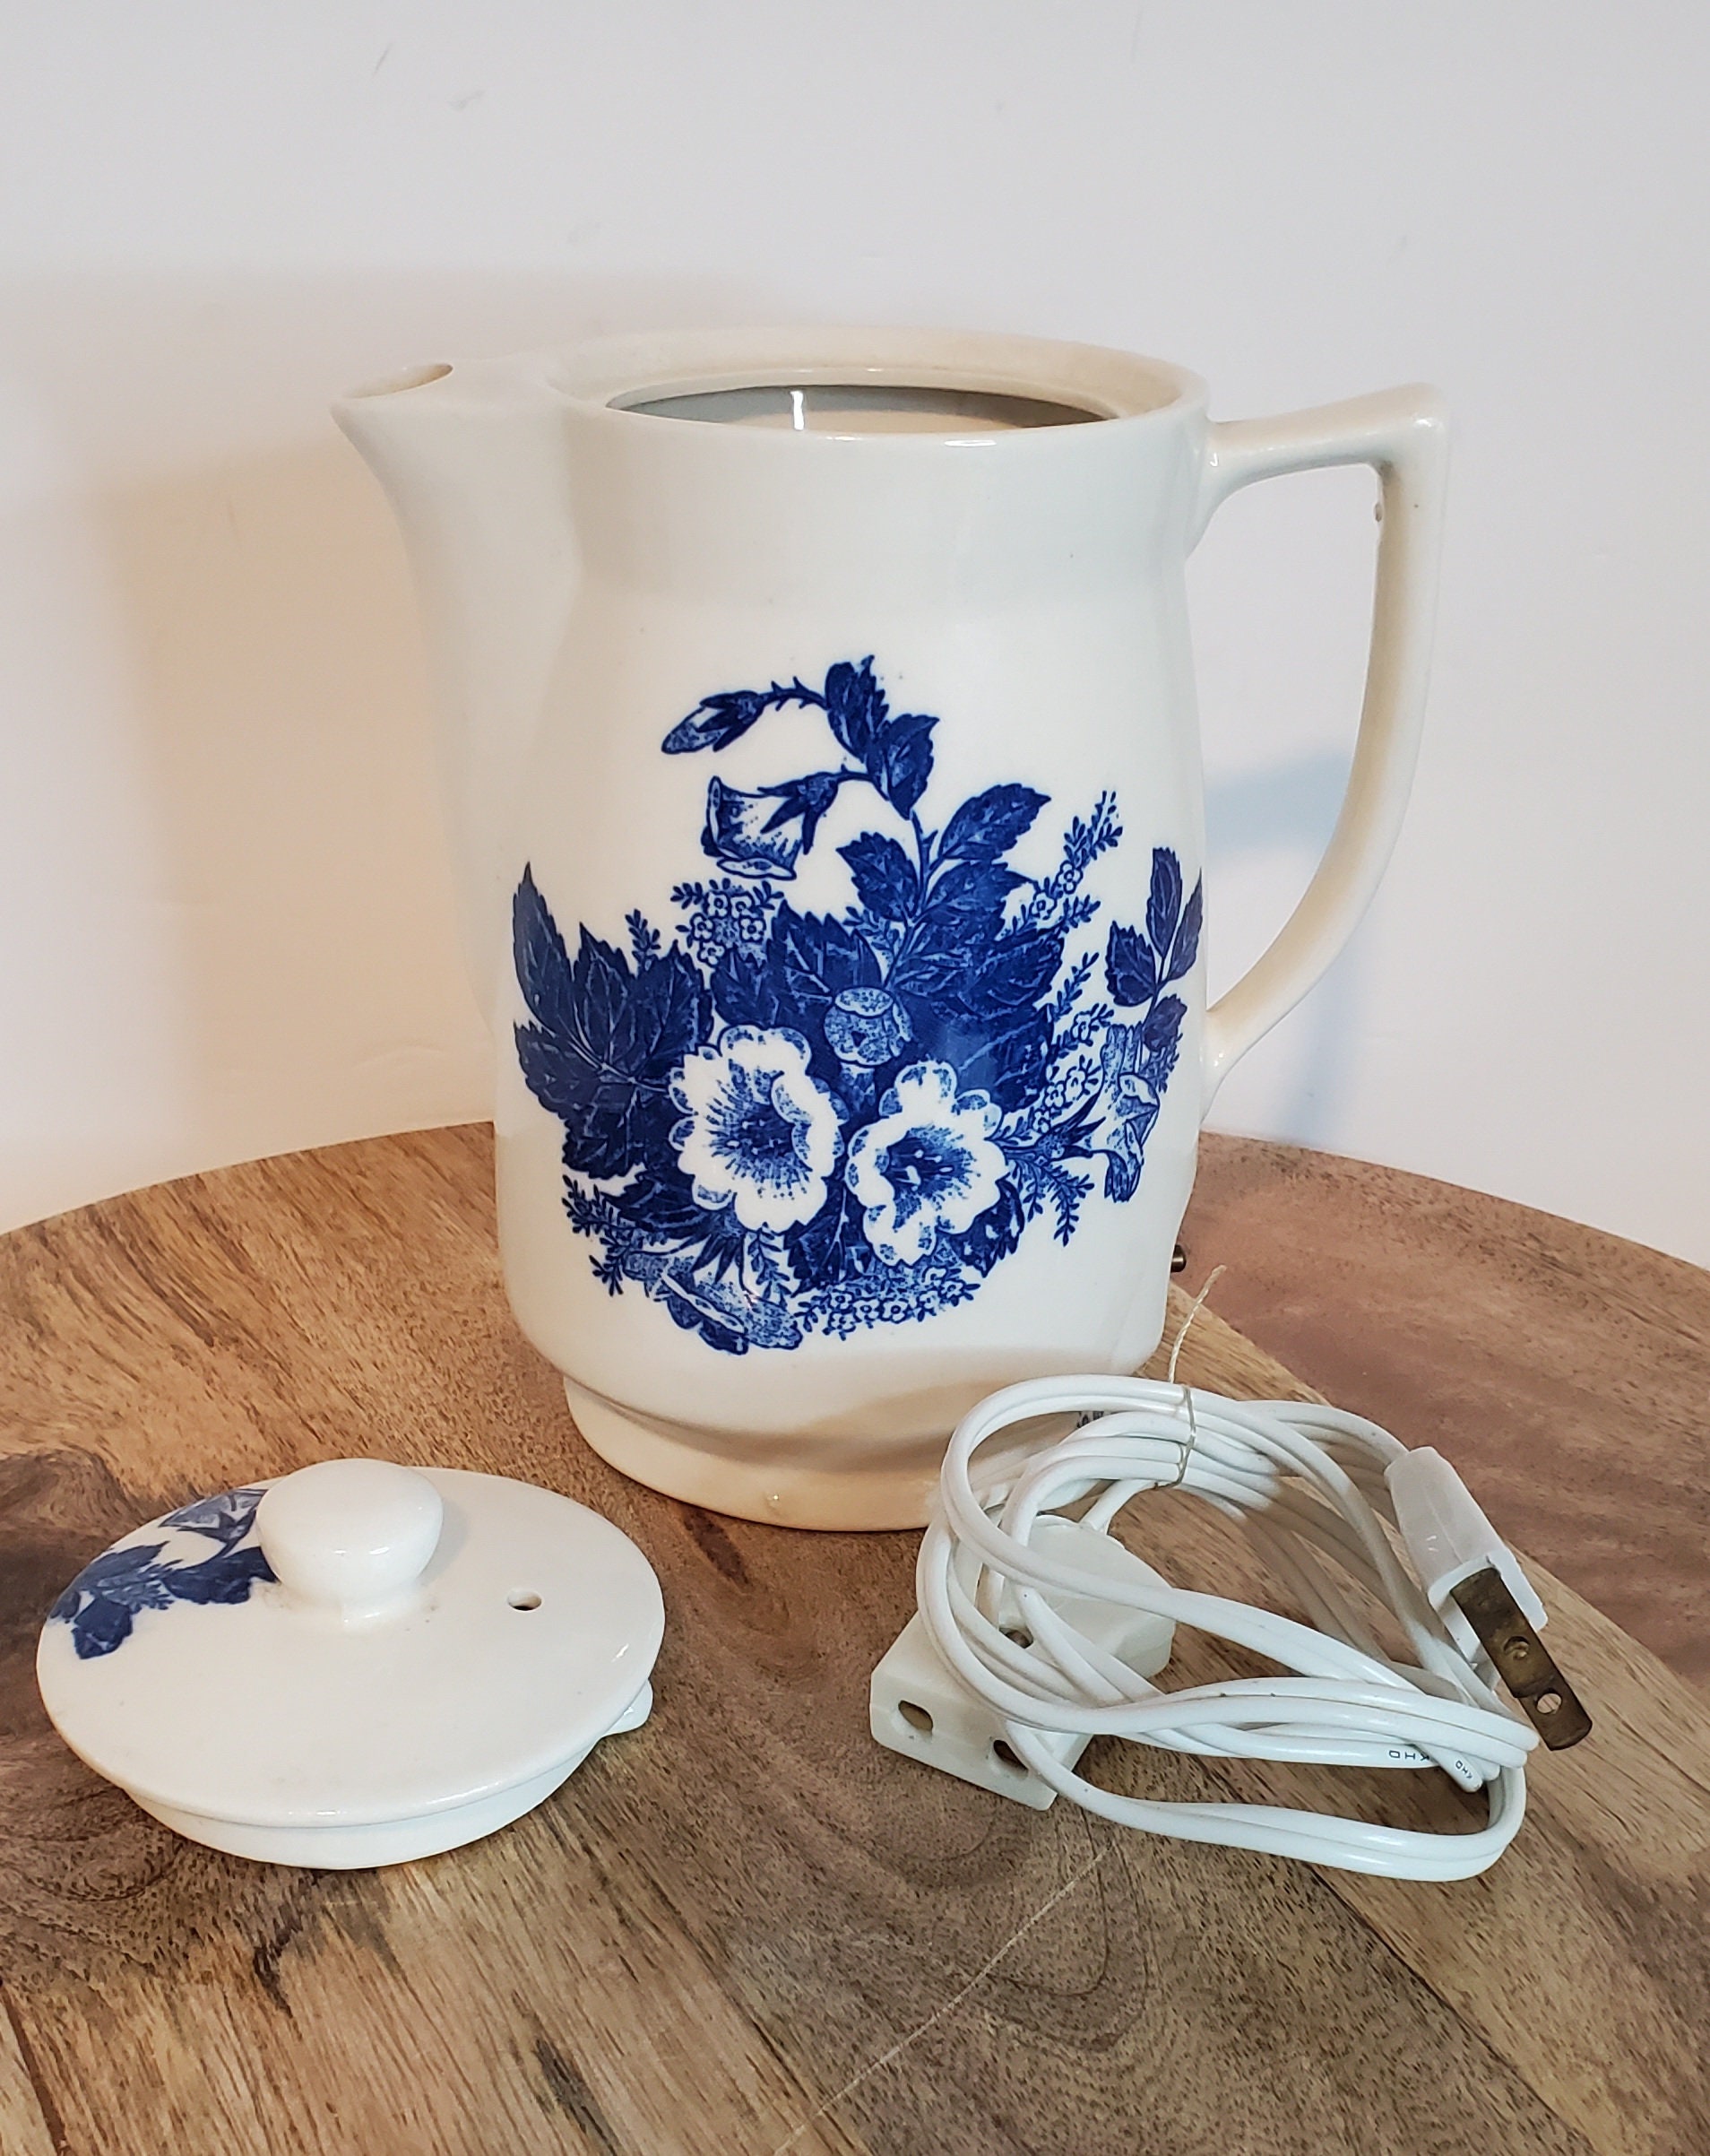 Tea Pot Kettle Hot Pot Vintage Electric White Ceramic Porcelain 6 Rose  Japan